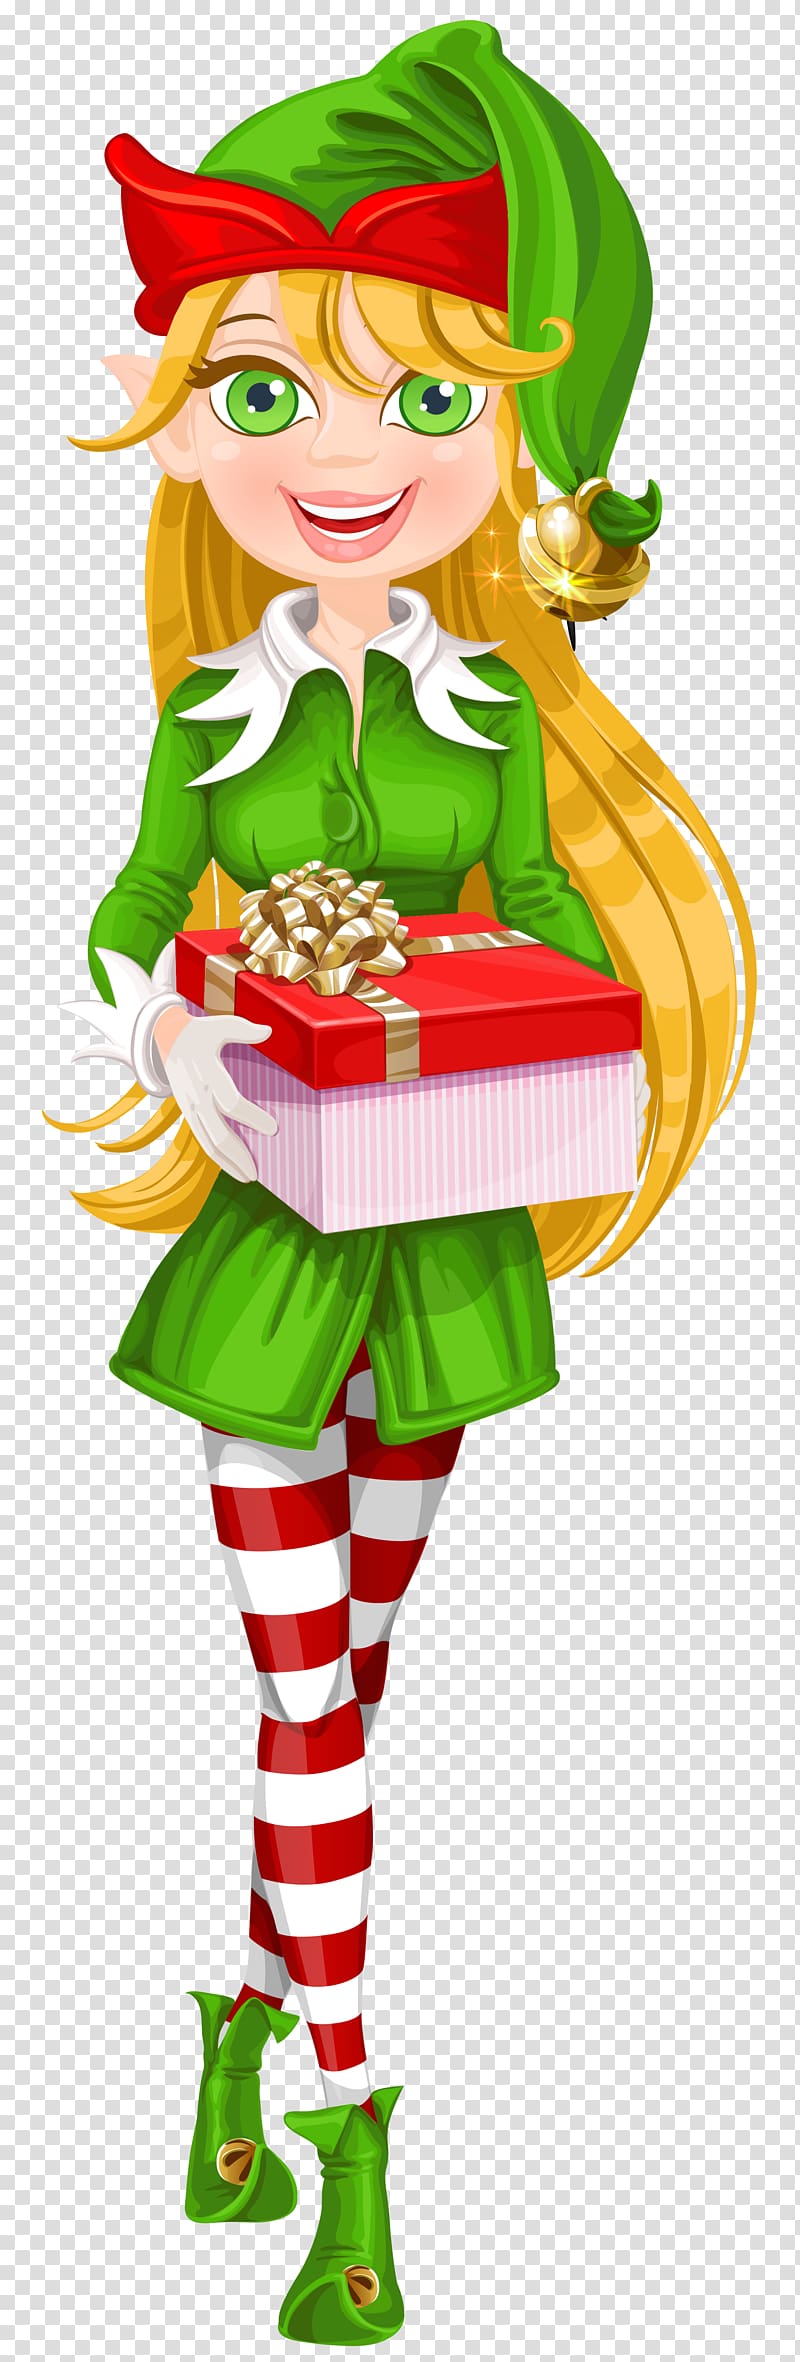 Female dwarf holding gift, The Elf on the Shelf Santa Claus Christmas